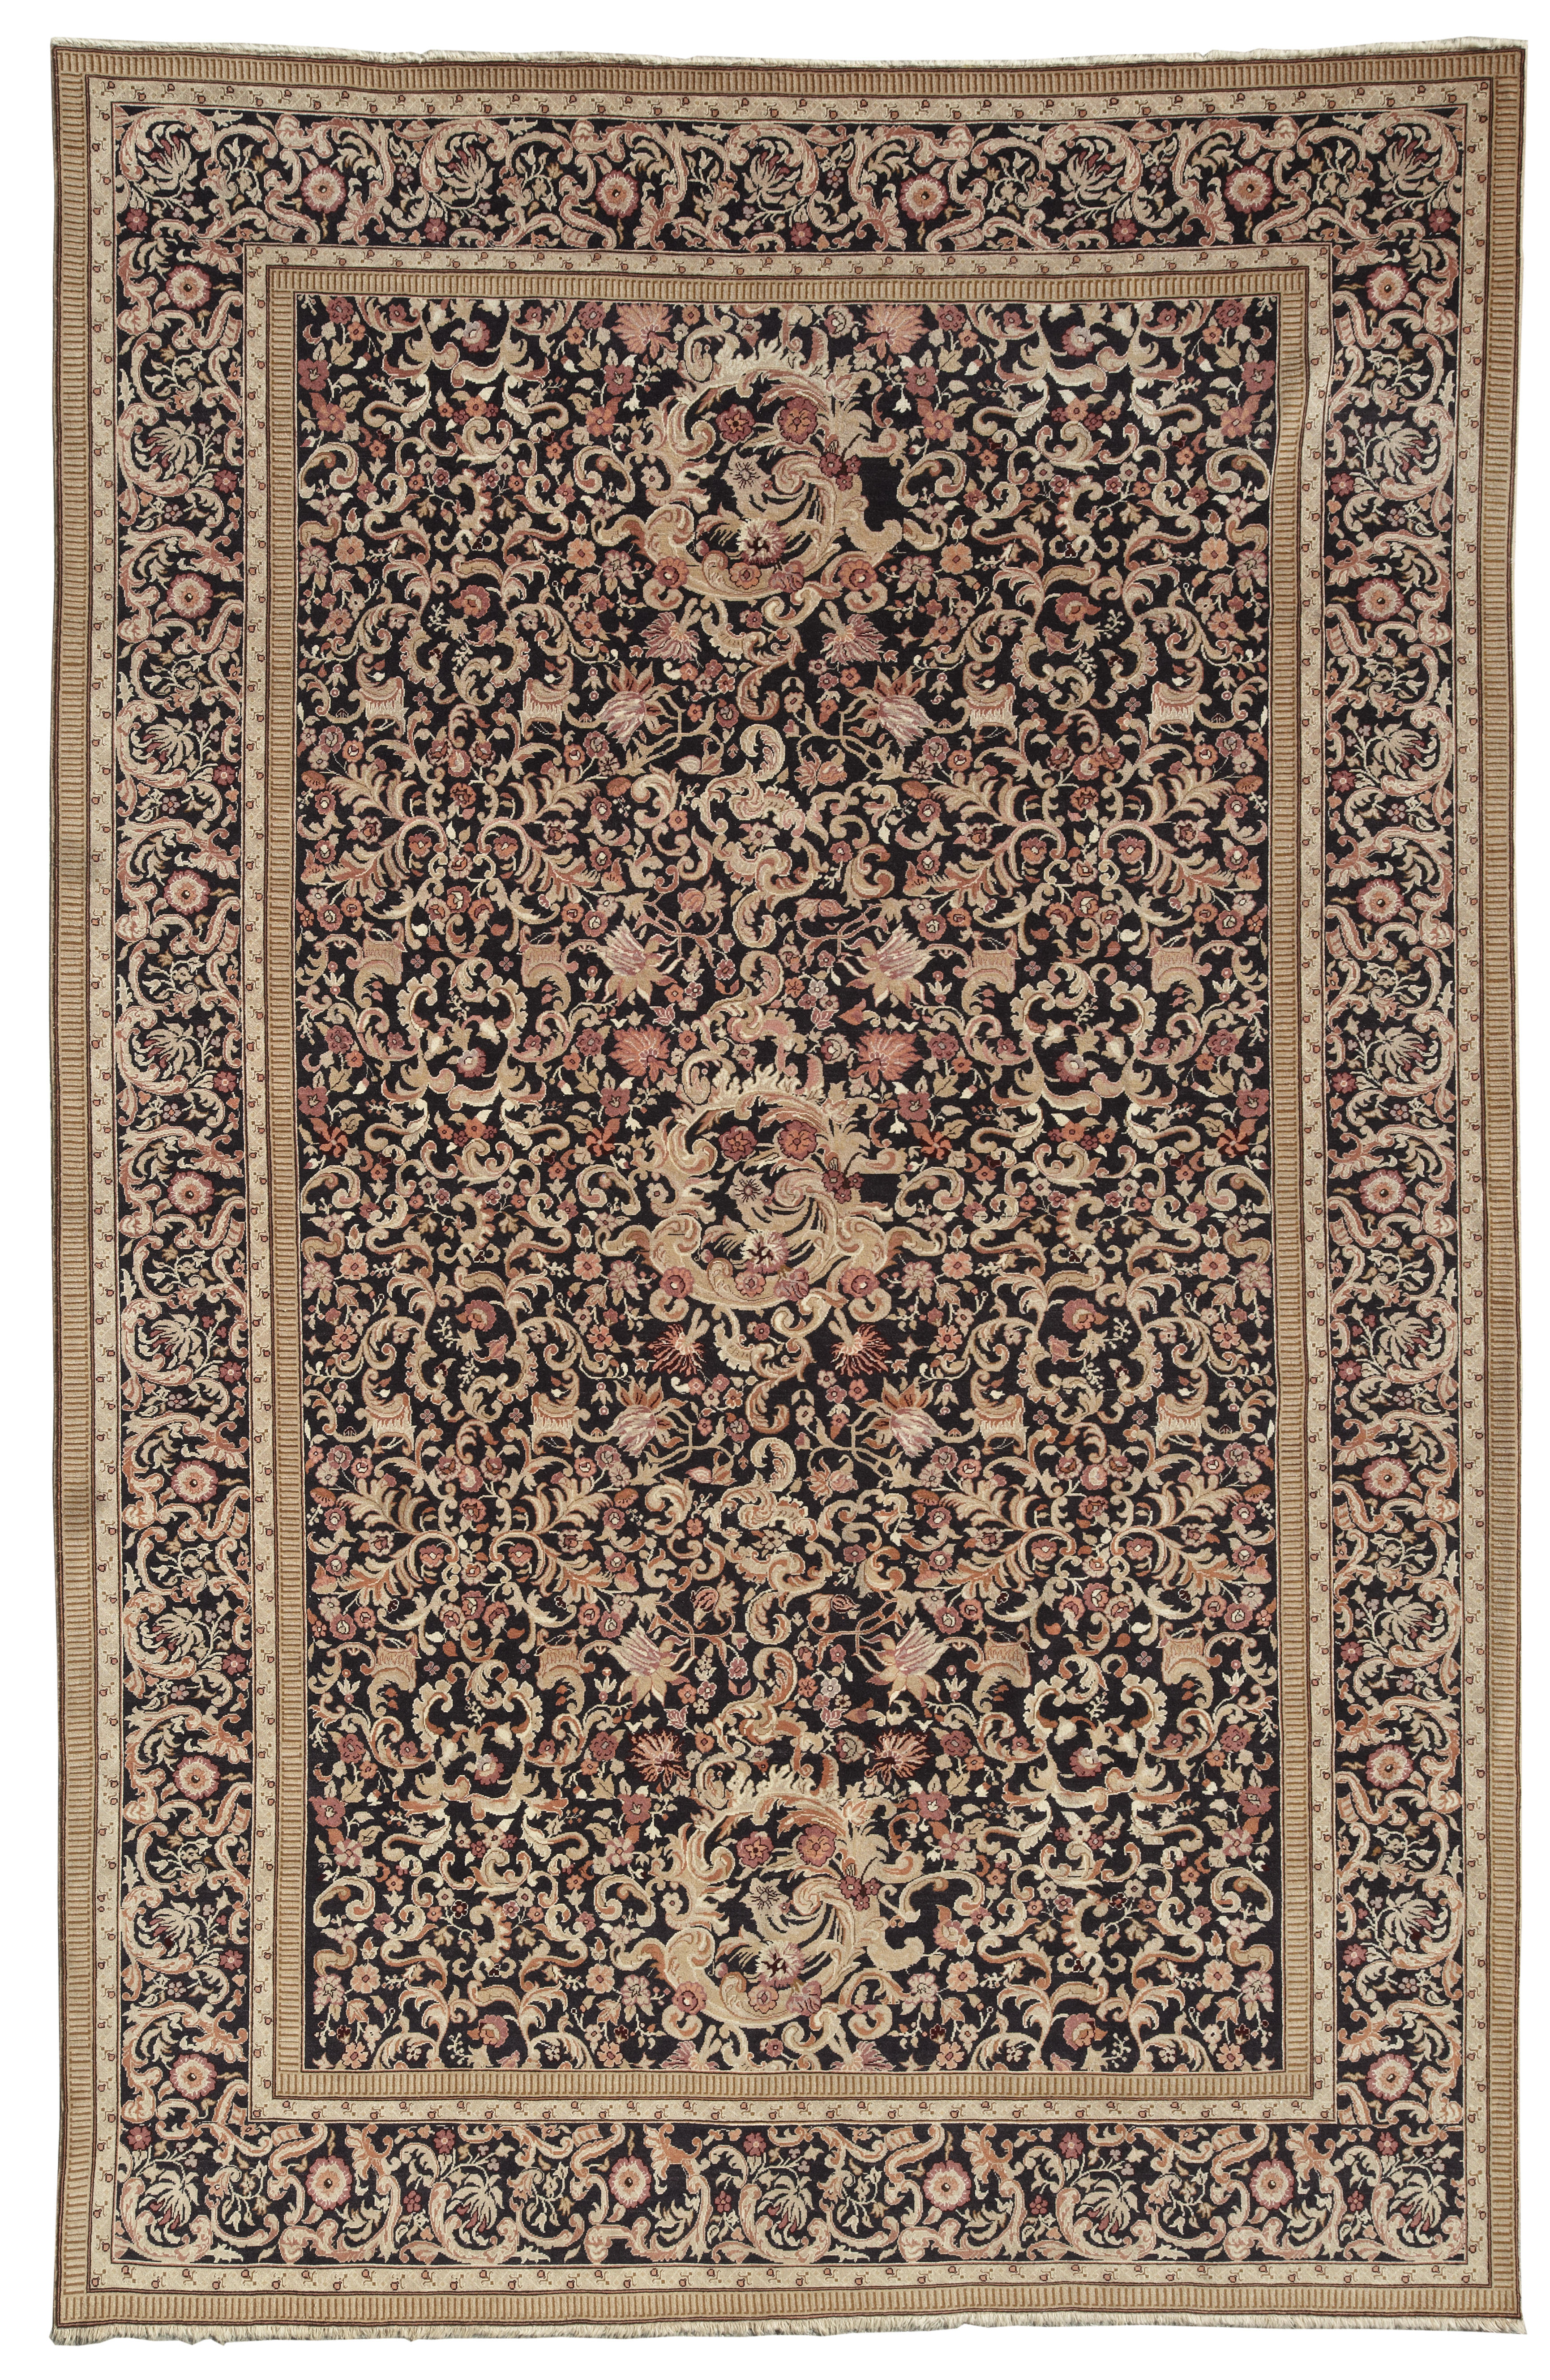 A machine made Persian style carpet